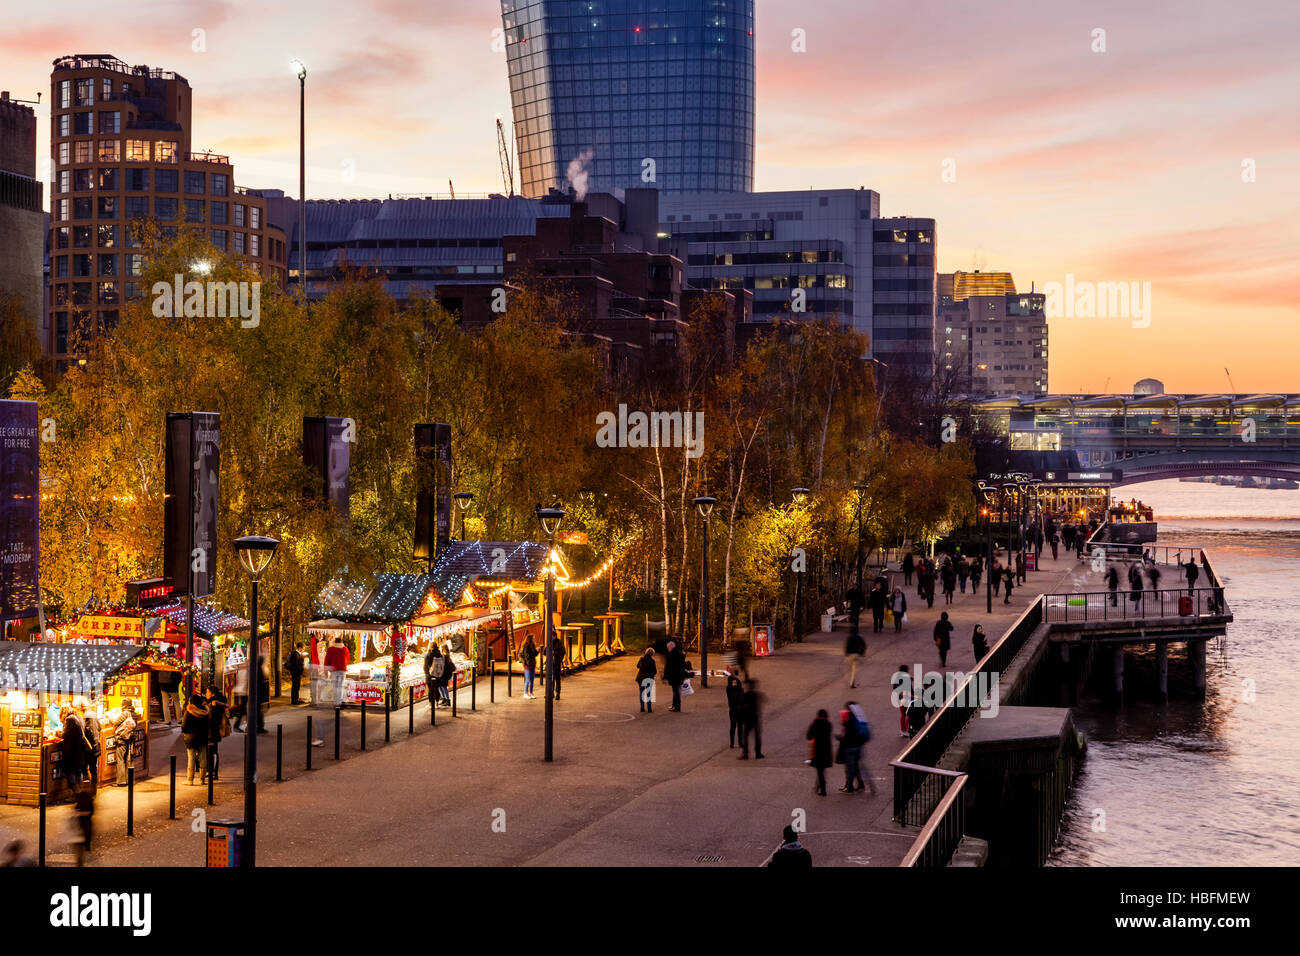 The Christmas Market At Tate Modern, London, England Stock Photo - Alamy